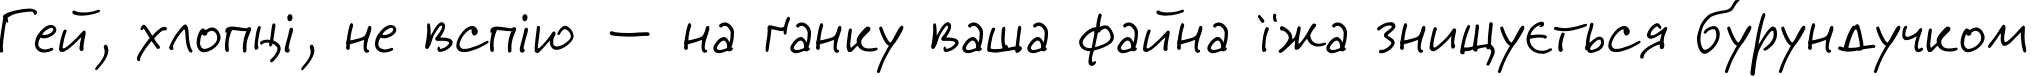 Пример написания шрифтом Jeff Script текста на украинском